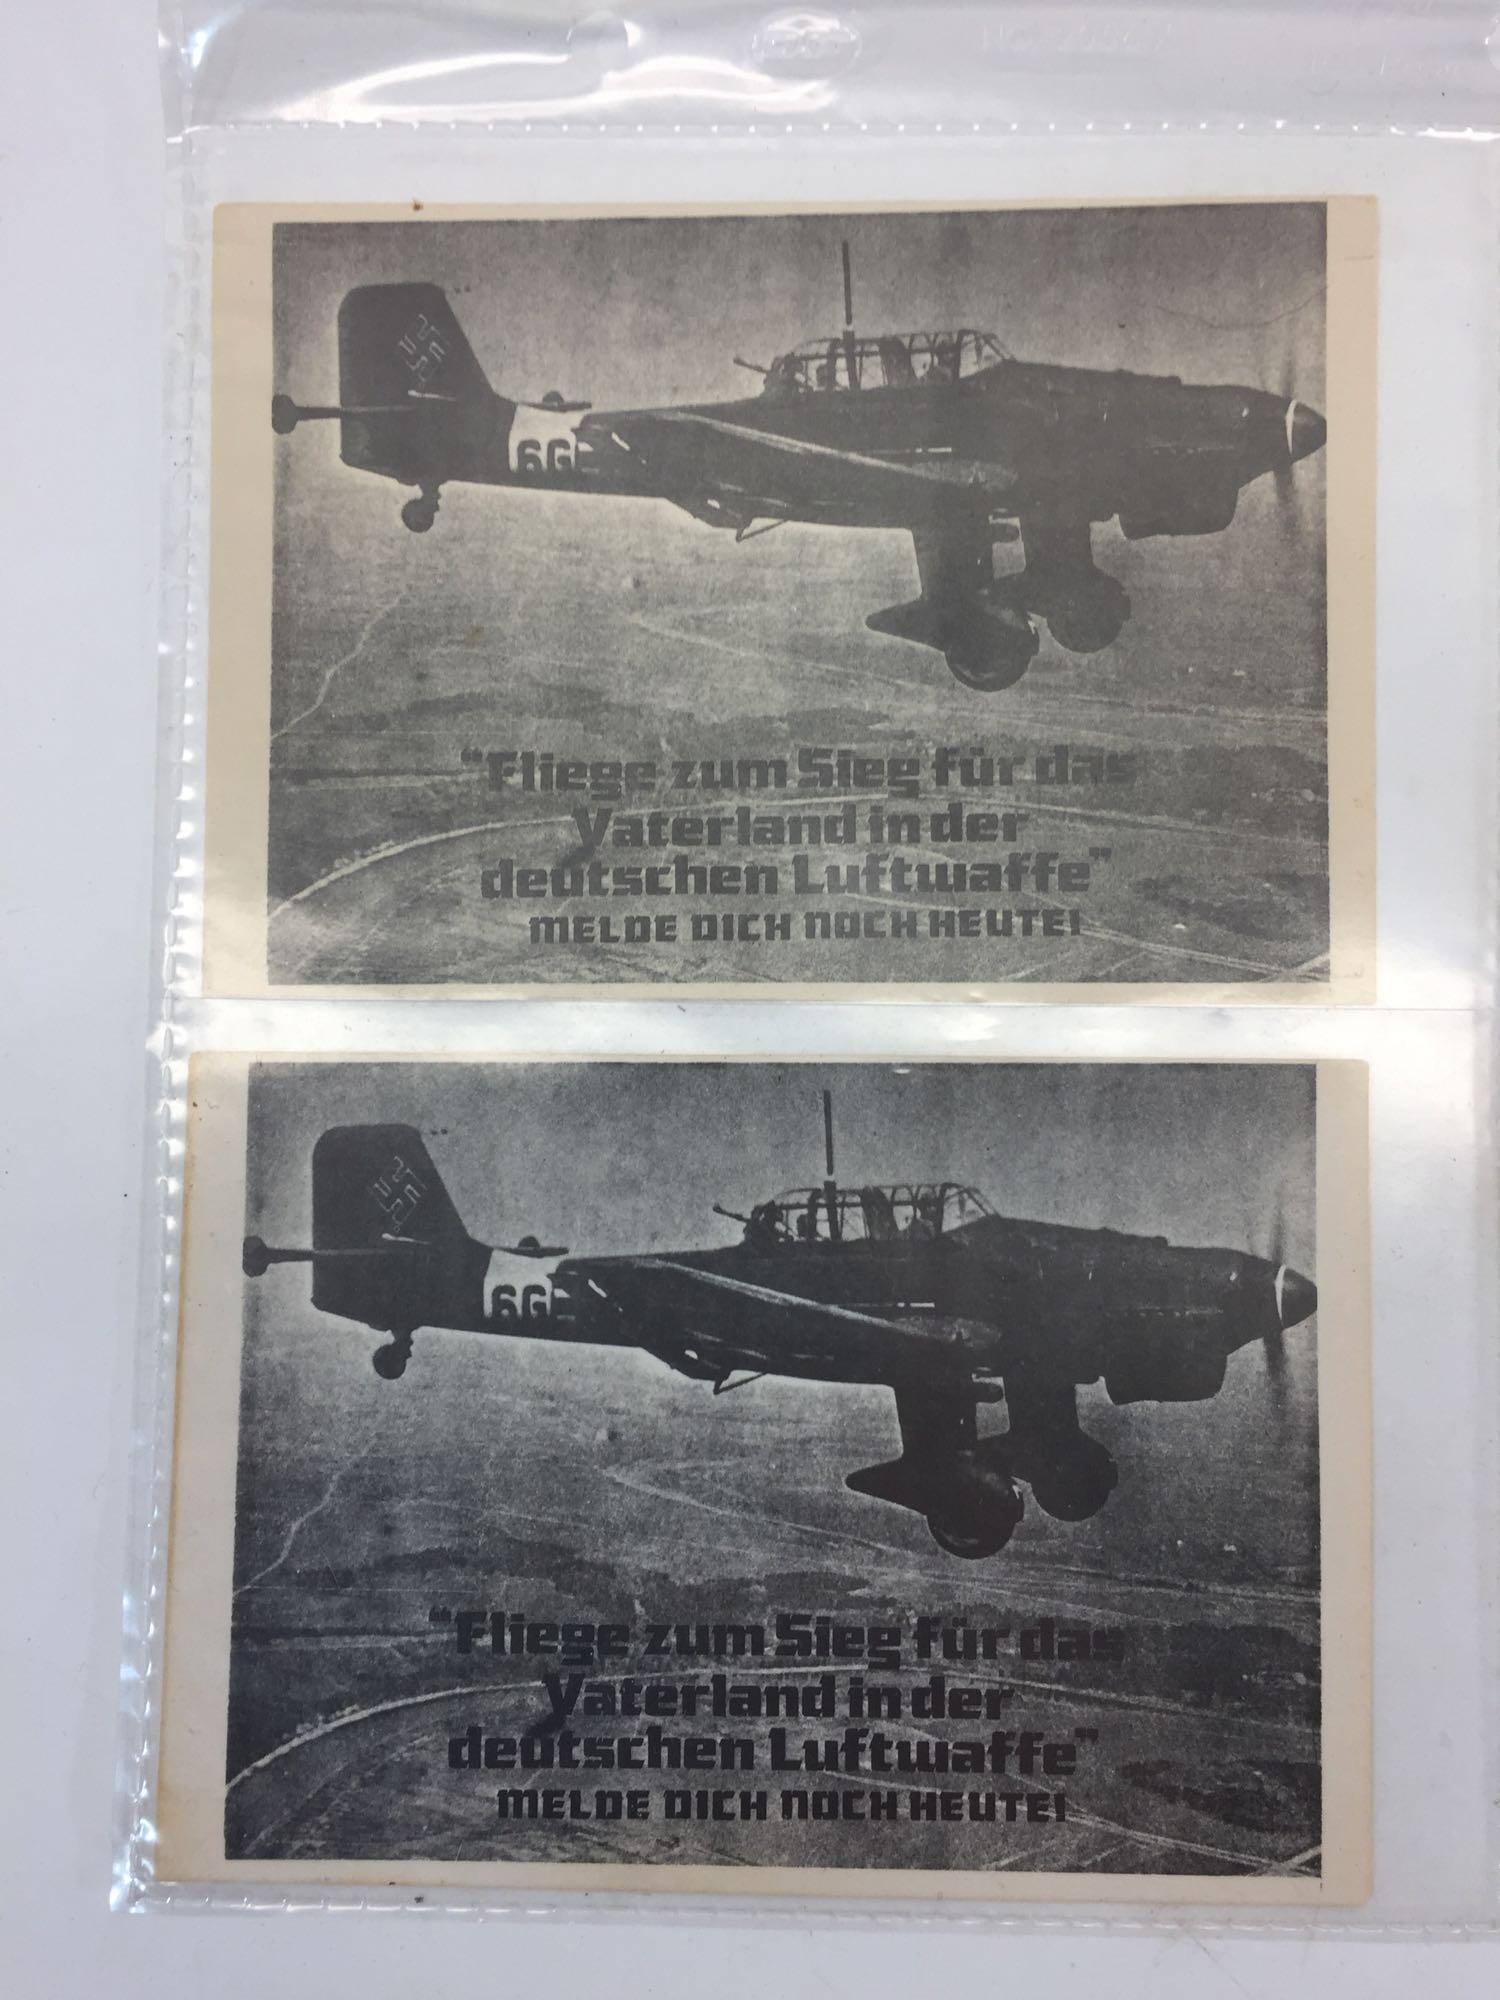 WW2 Era Newspaper, Postcards, Poster